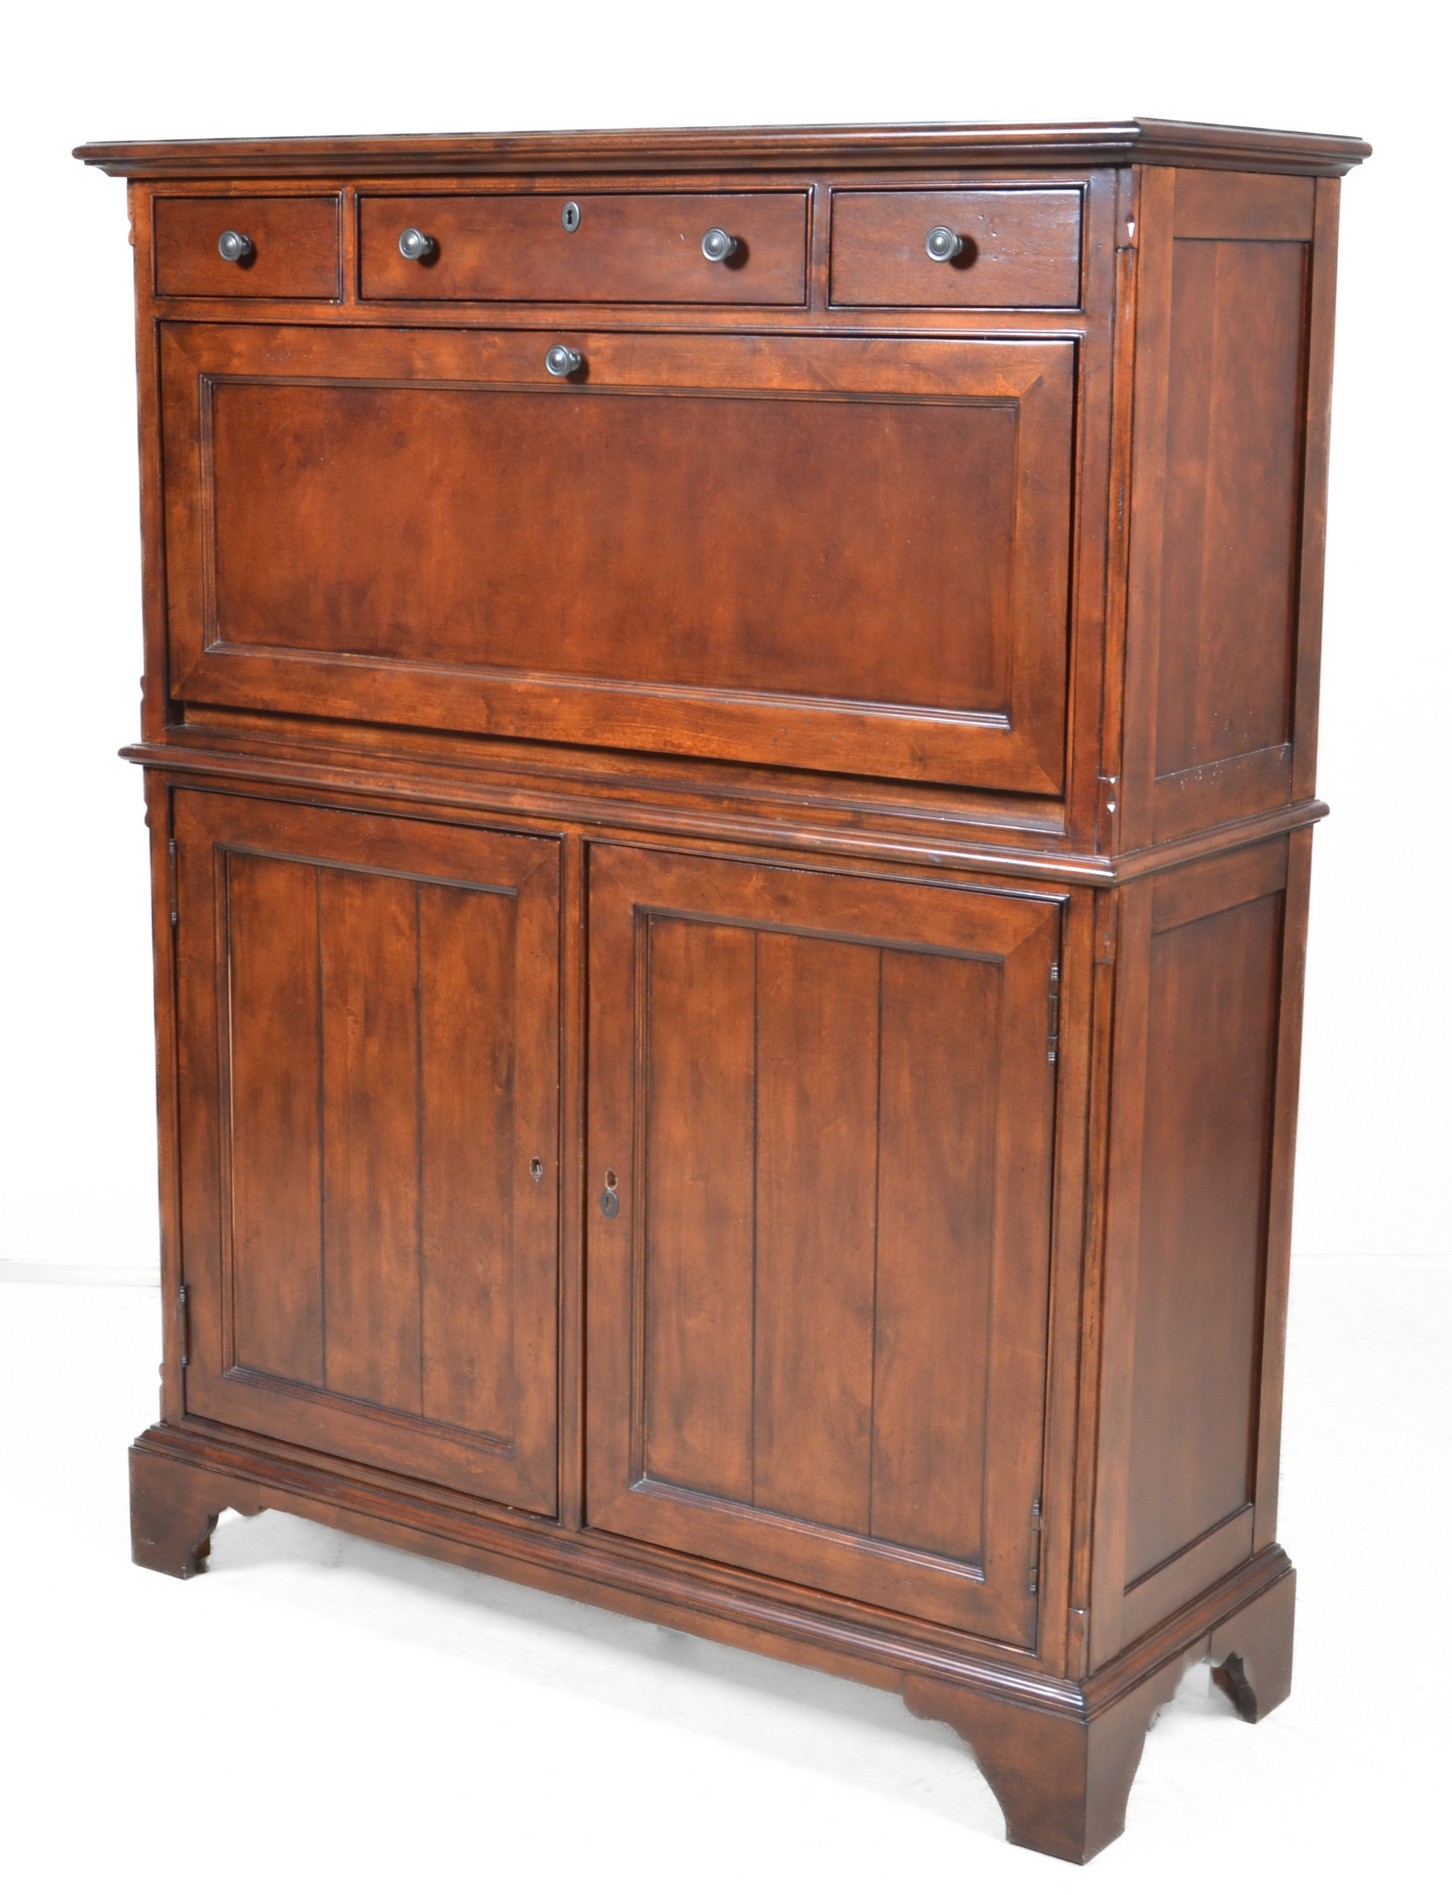 Stanley mahogany bar cabinet, three